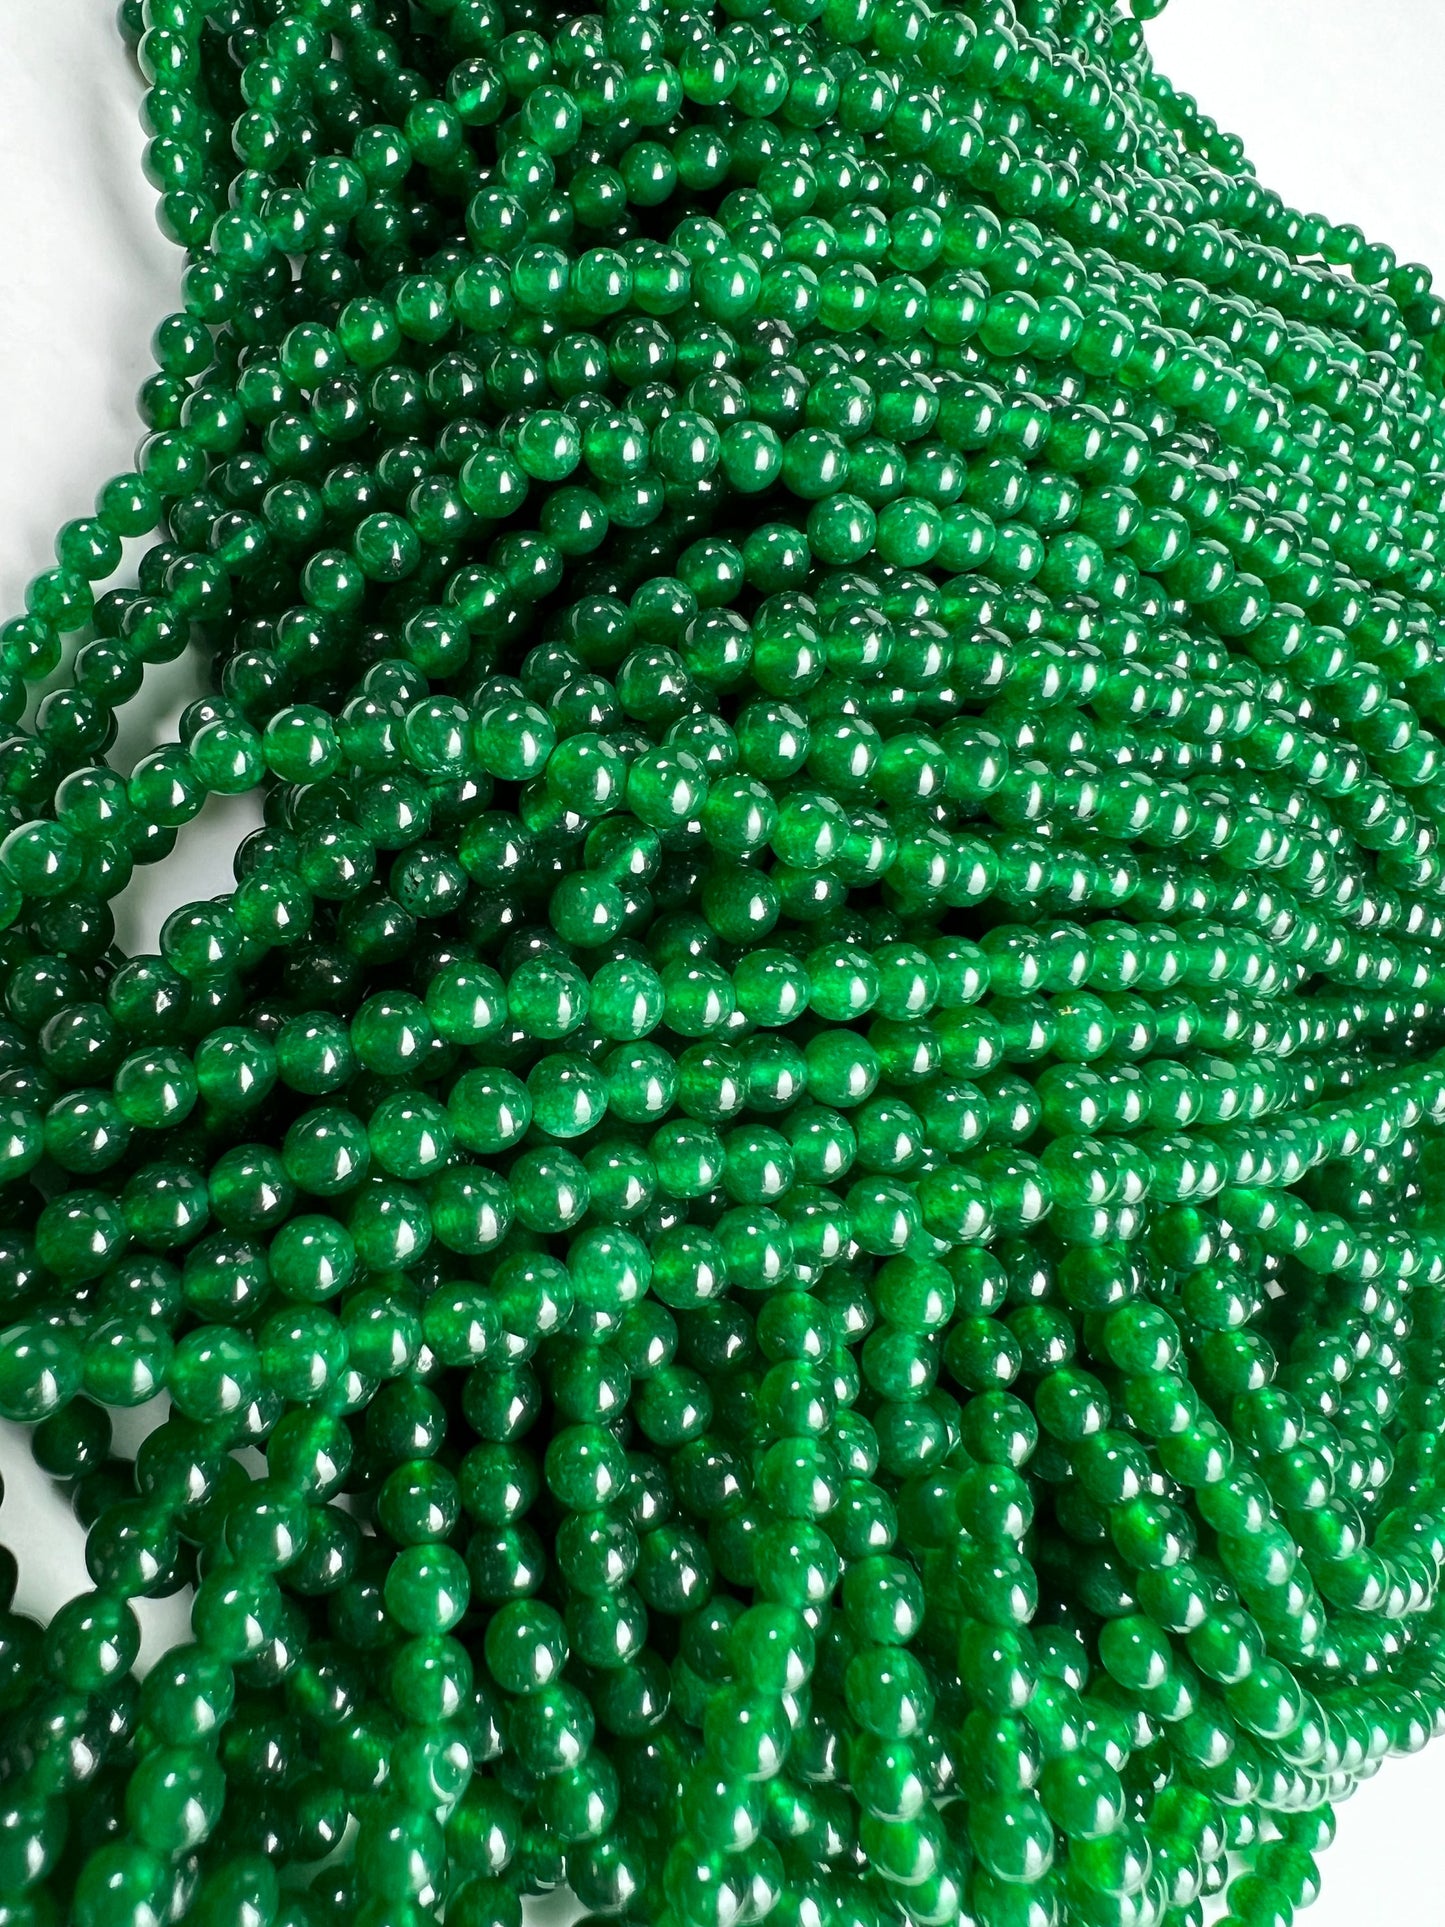 Canada jade 3mm smooth round bead 15” long for jewelry making dark green gemstone.